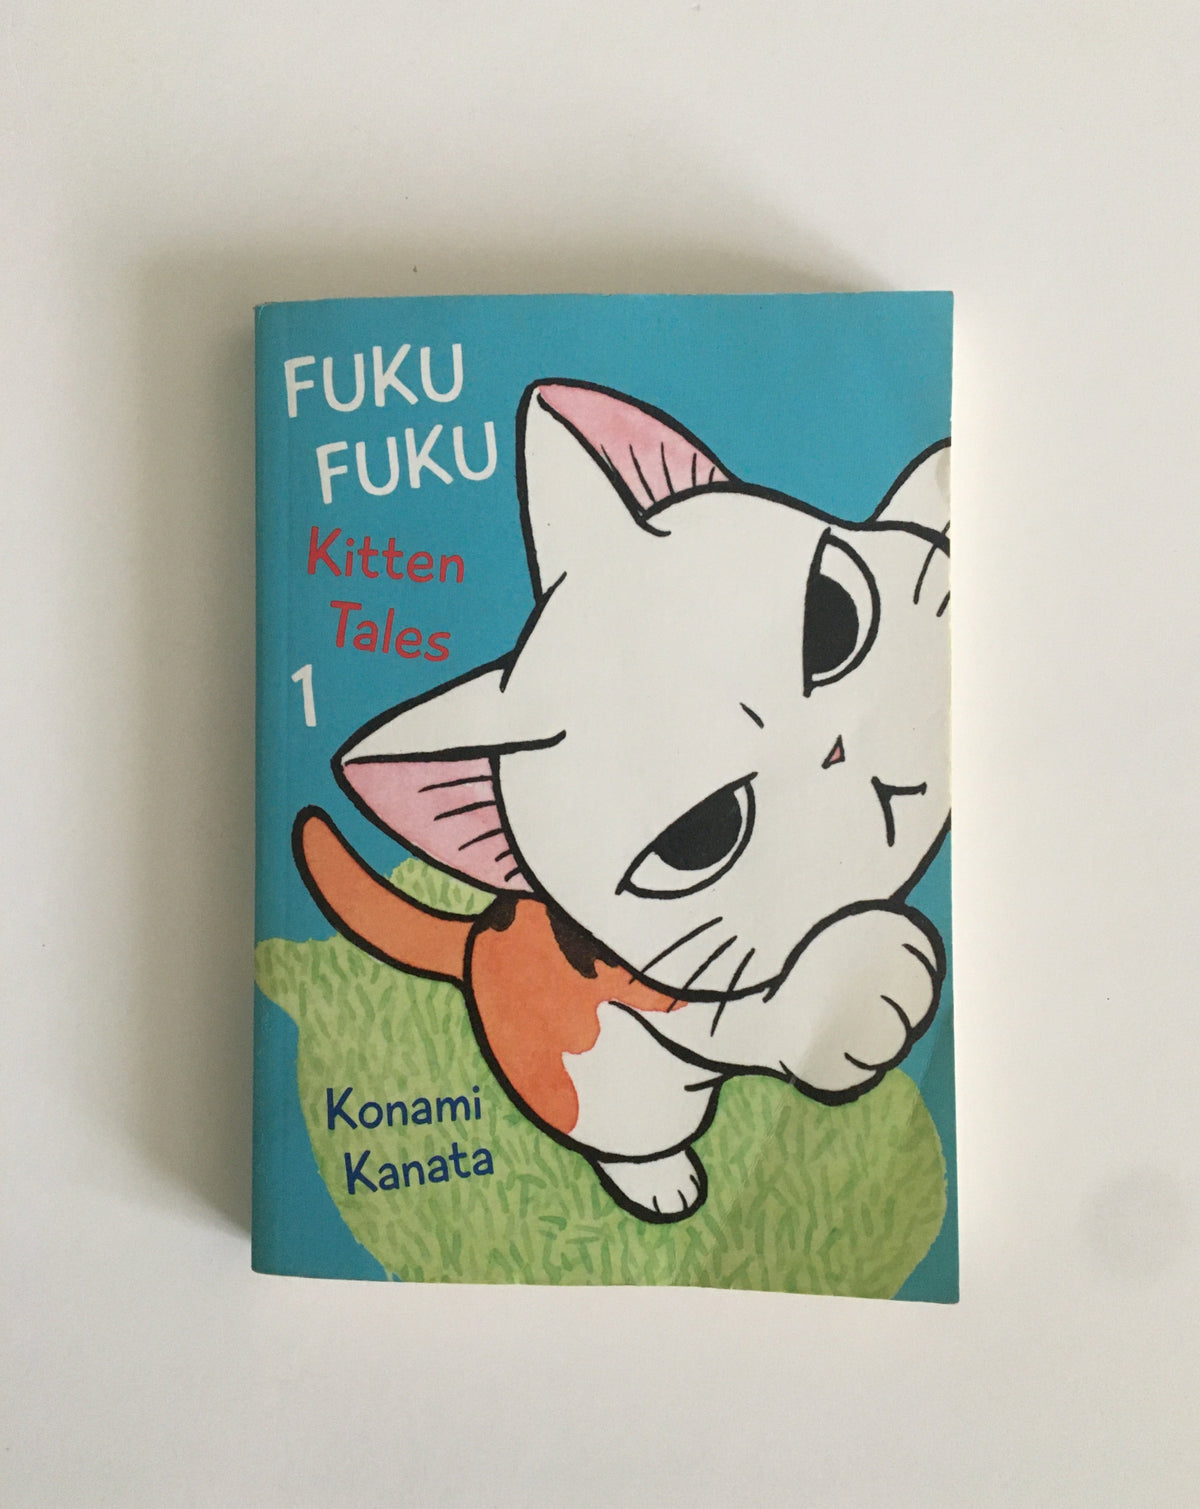 Fuku Fuku: Kitten Tales by Konami Kanata